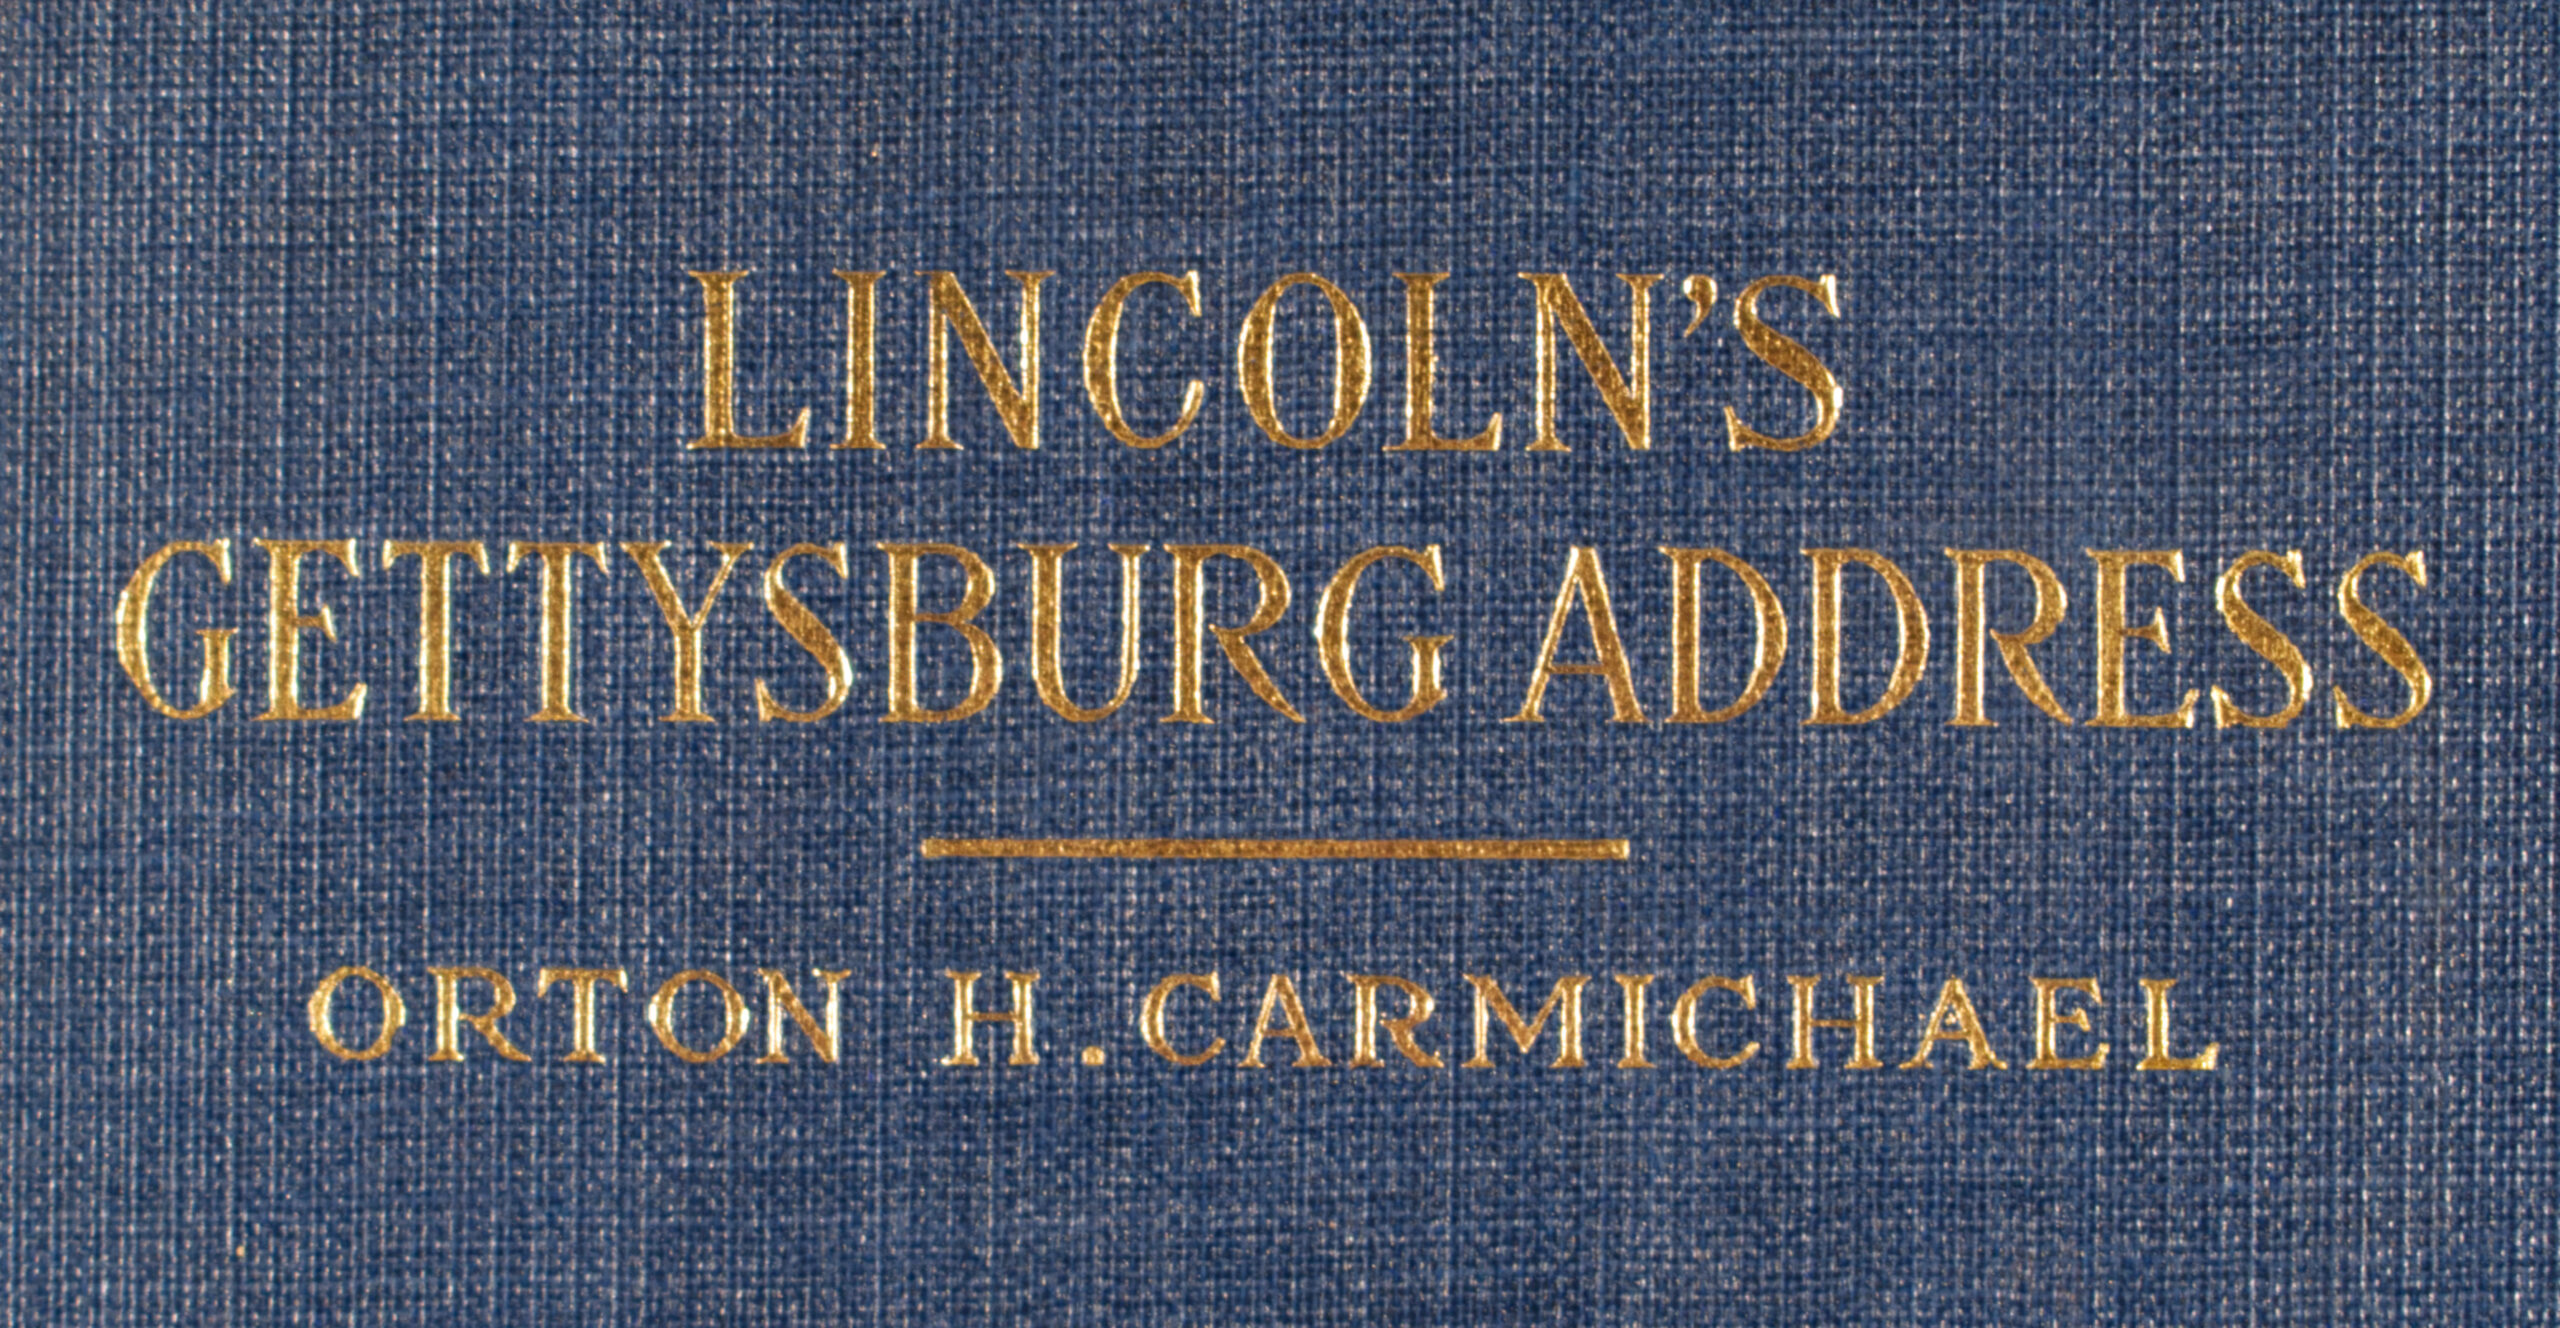 Carmichael, Orton H. Lincoln’s Gettysburg Address. New York: The Abingdon Press, 1917.